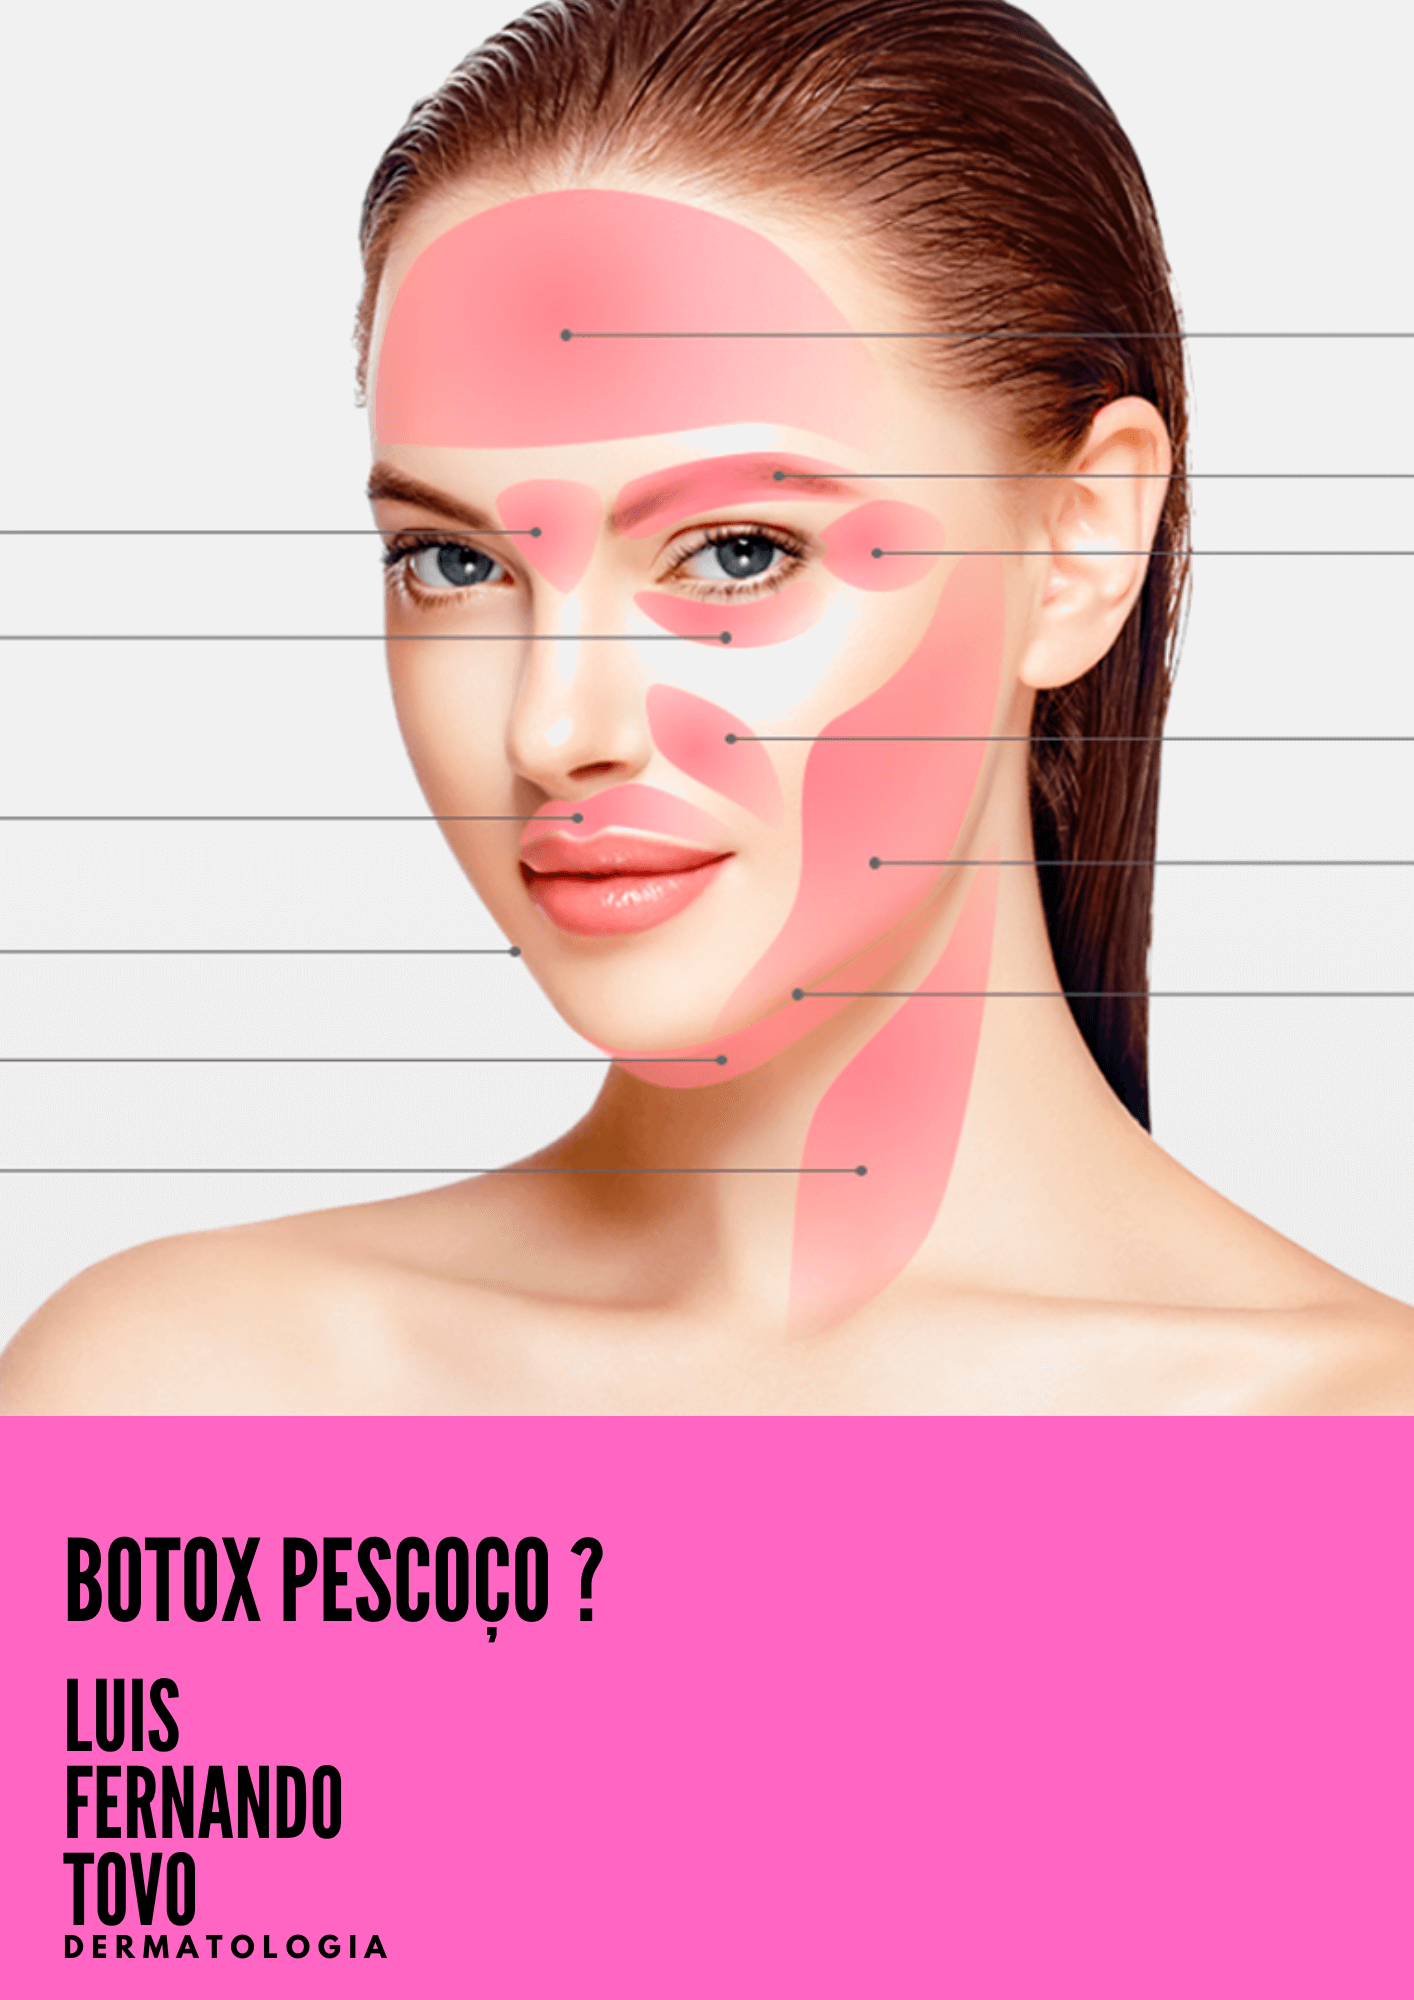 Barbie botox | toxina botunilica no pescoço para afinar? E seguro? dr tovo Luis Fernando